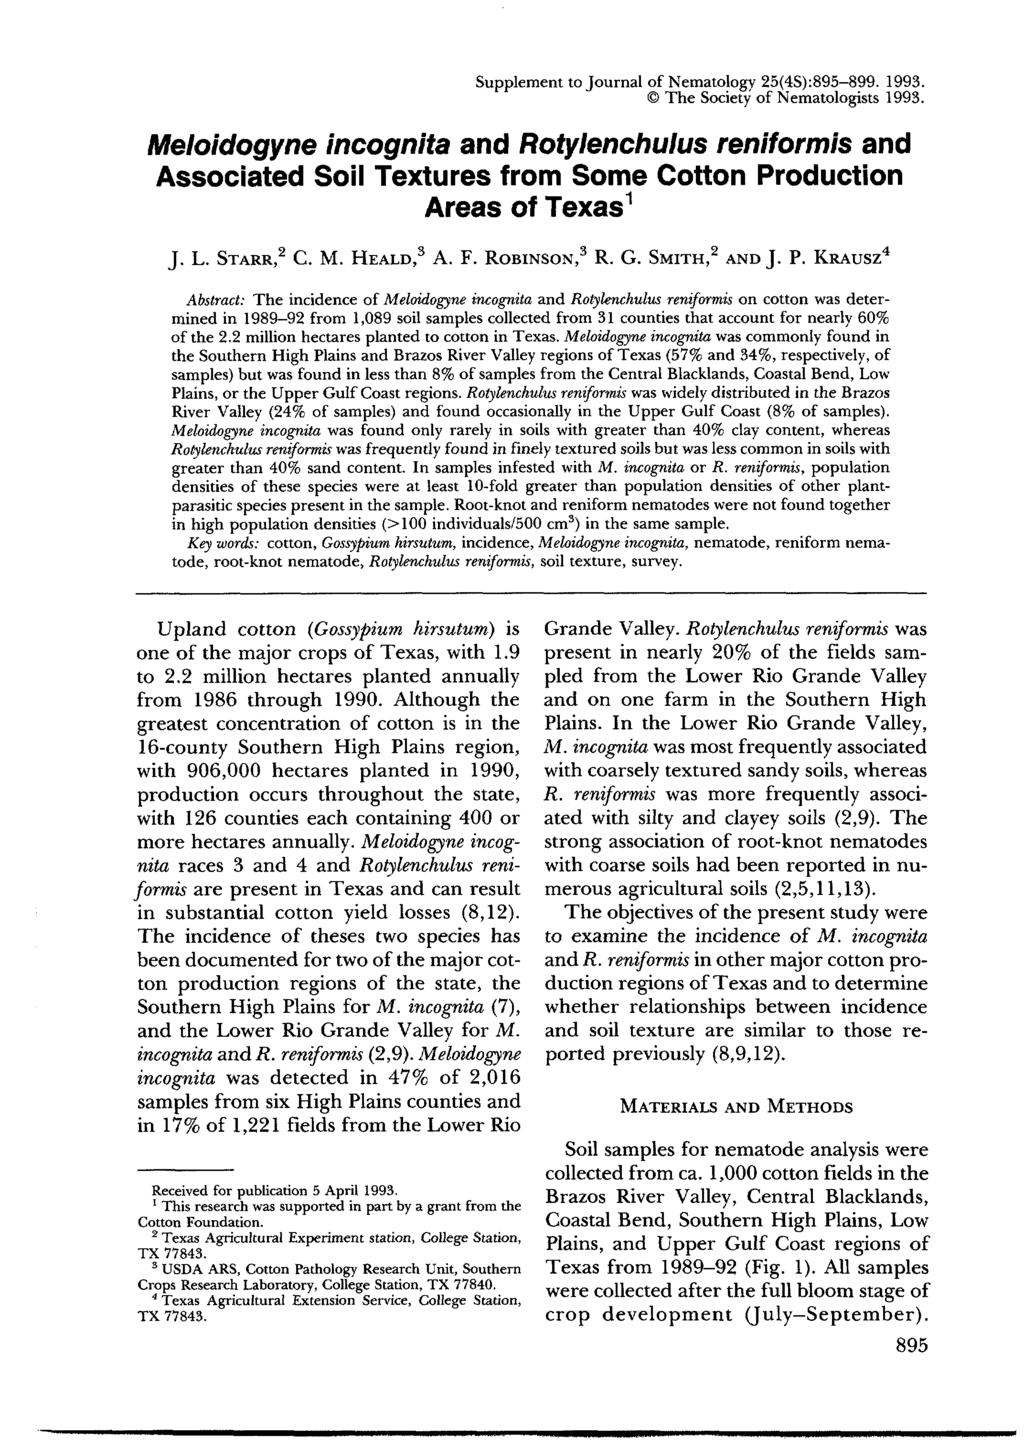 Supplement to Journal of Nematology 25(4S):895-899. 1993. The Society of Nematologists 1993.